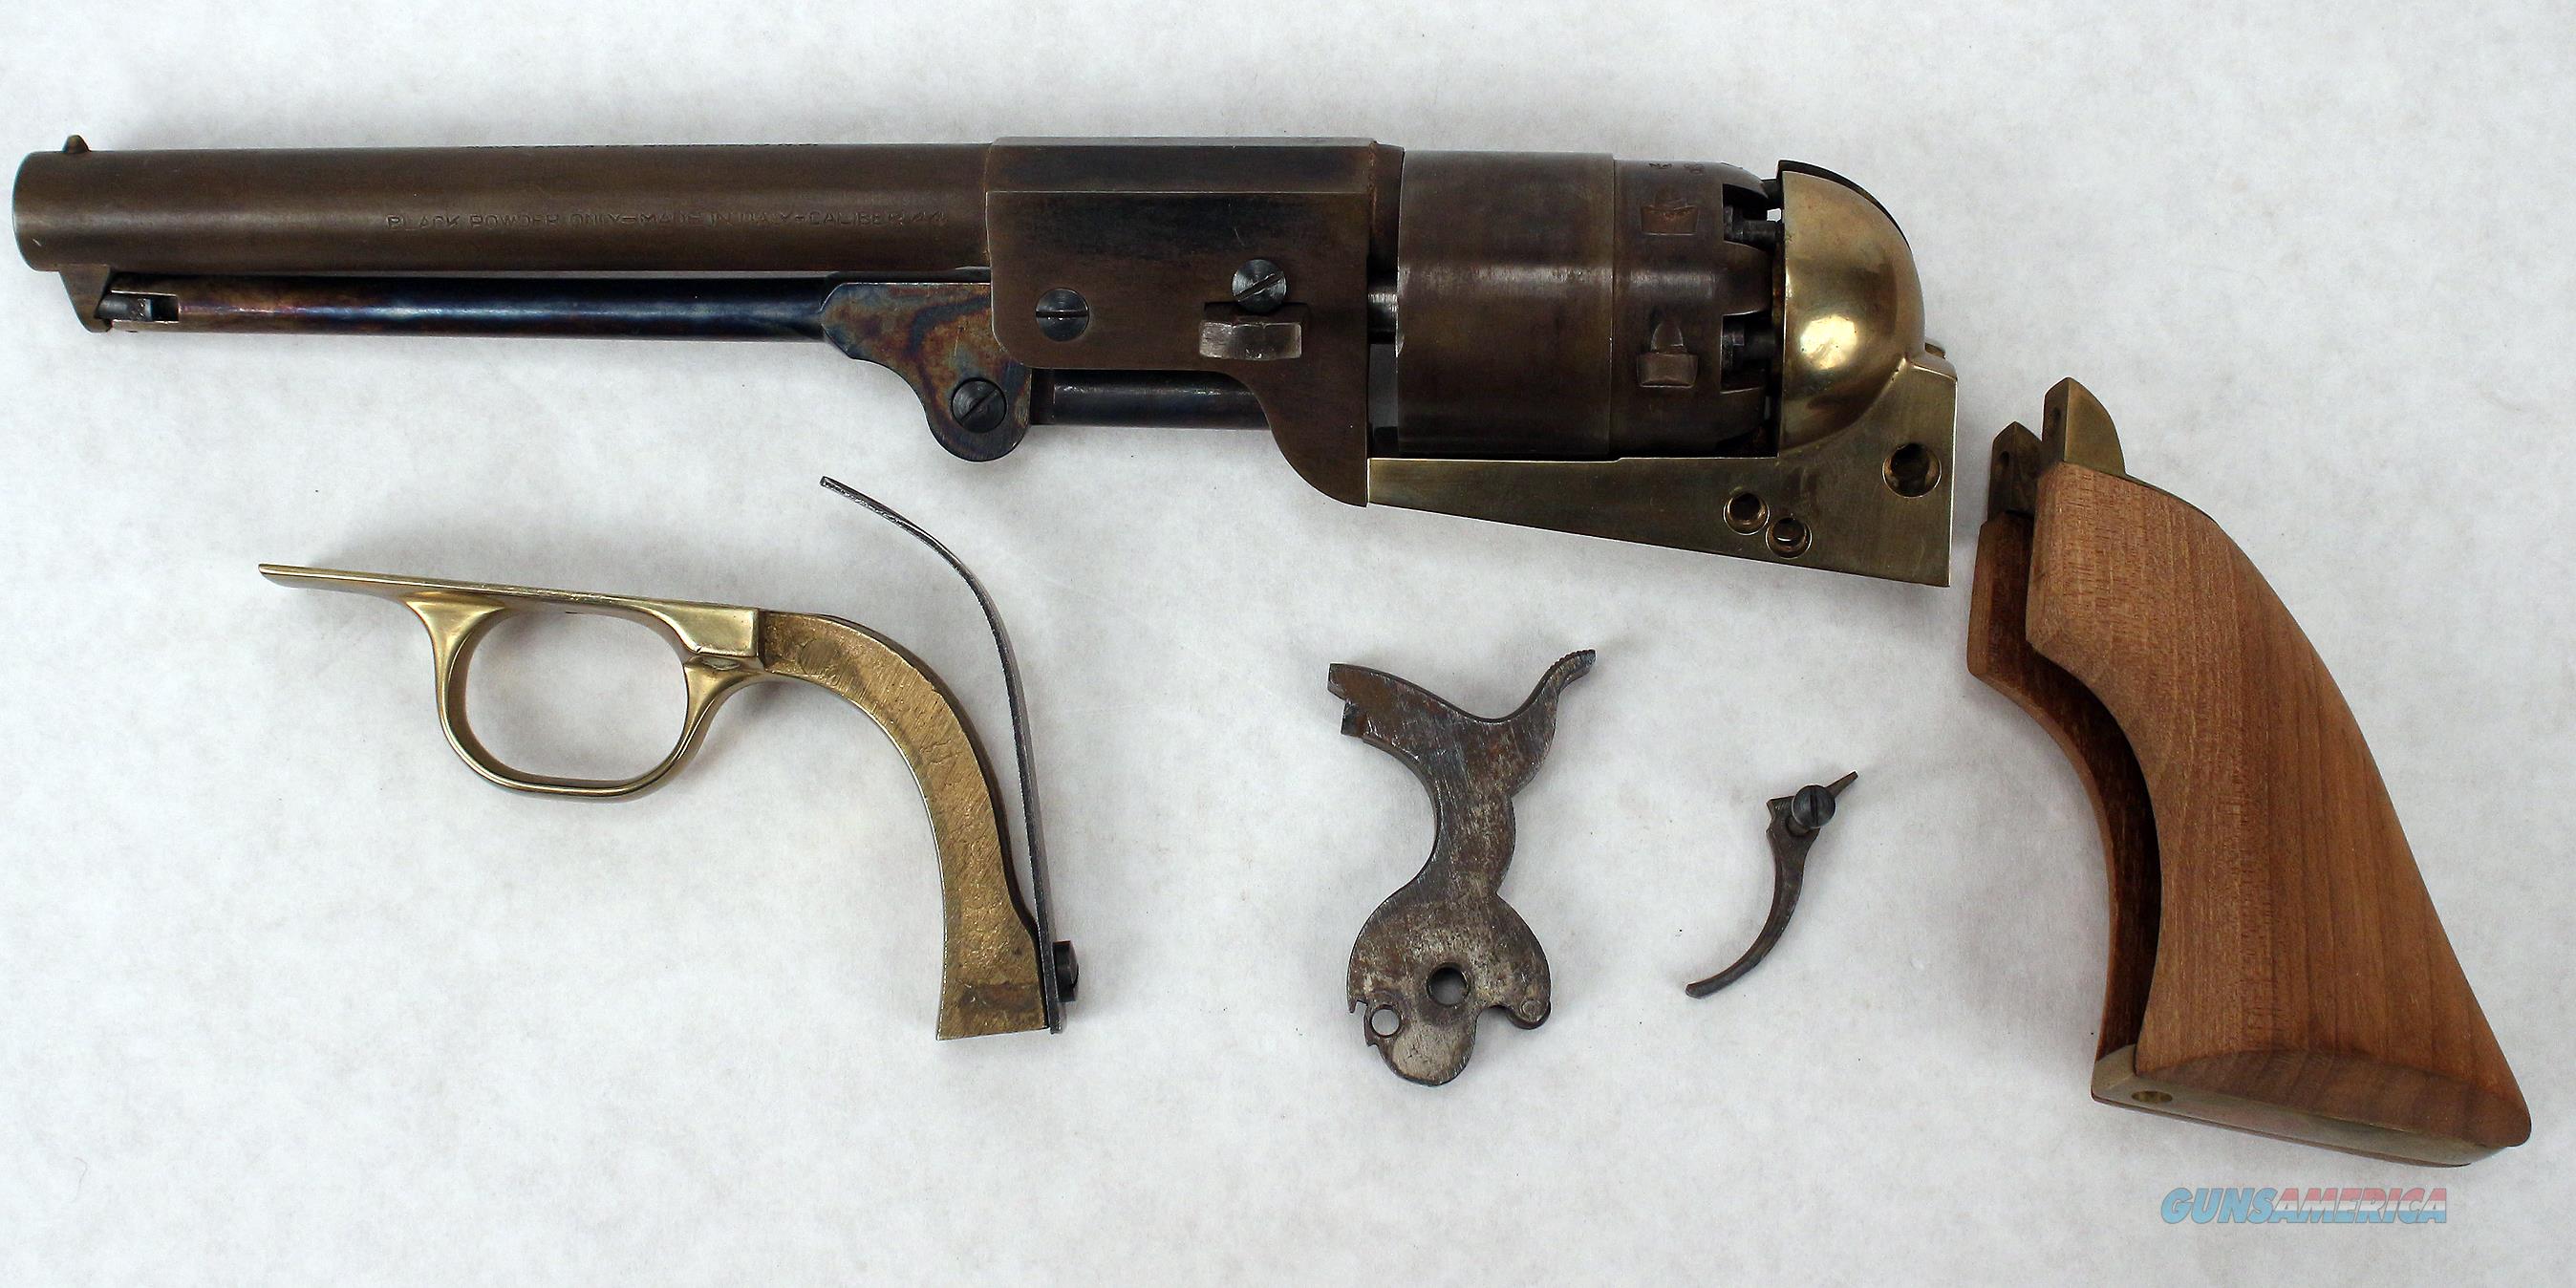 black powder civil war pistols 1860 navy